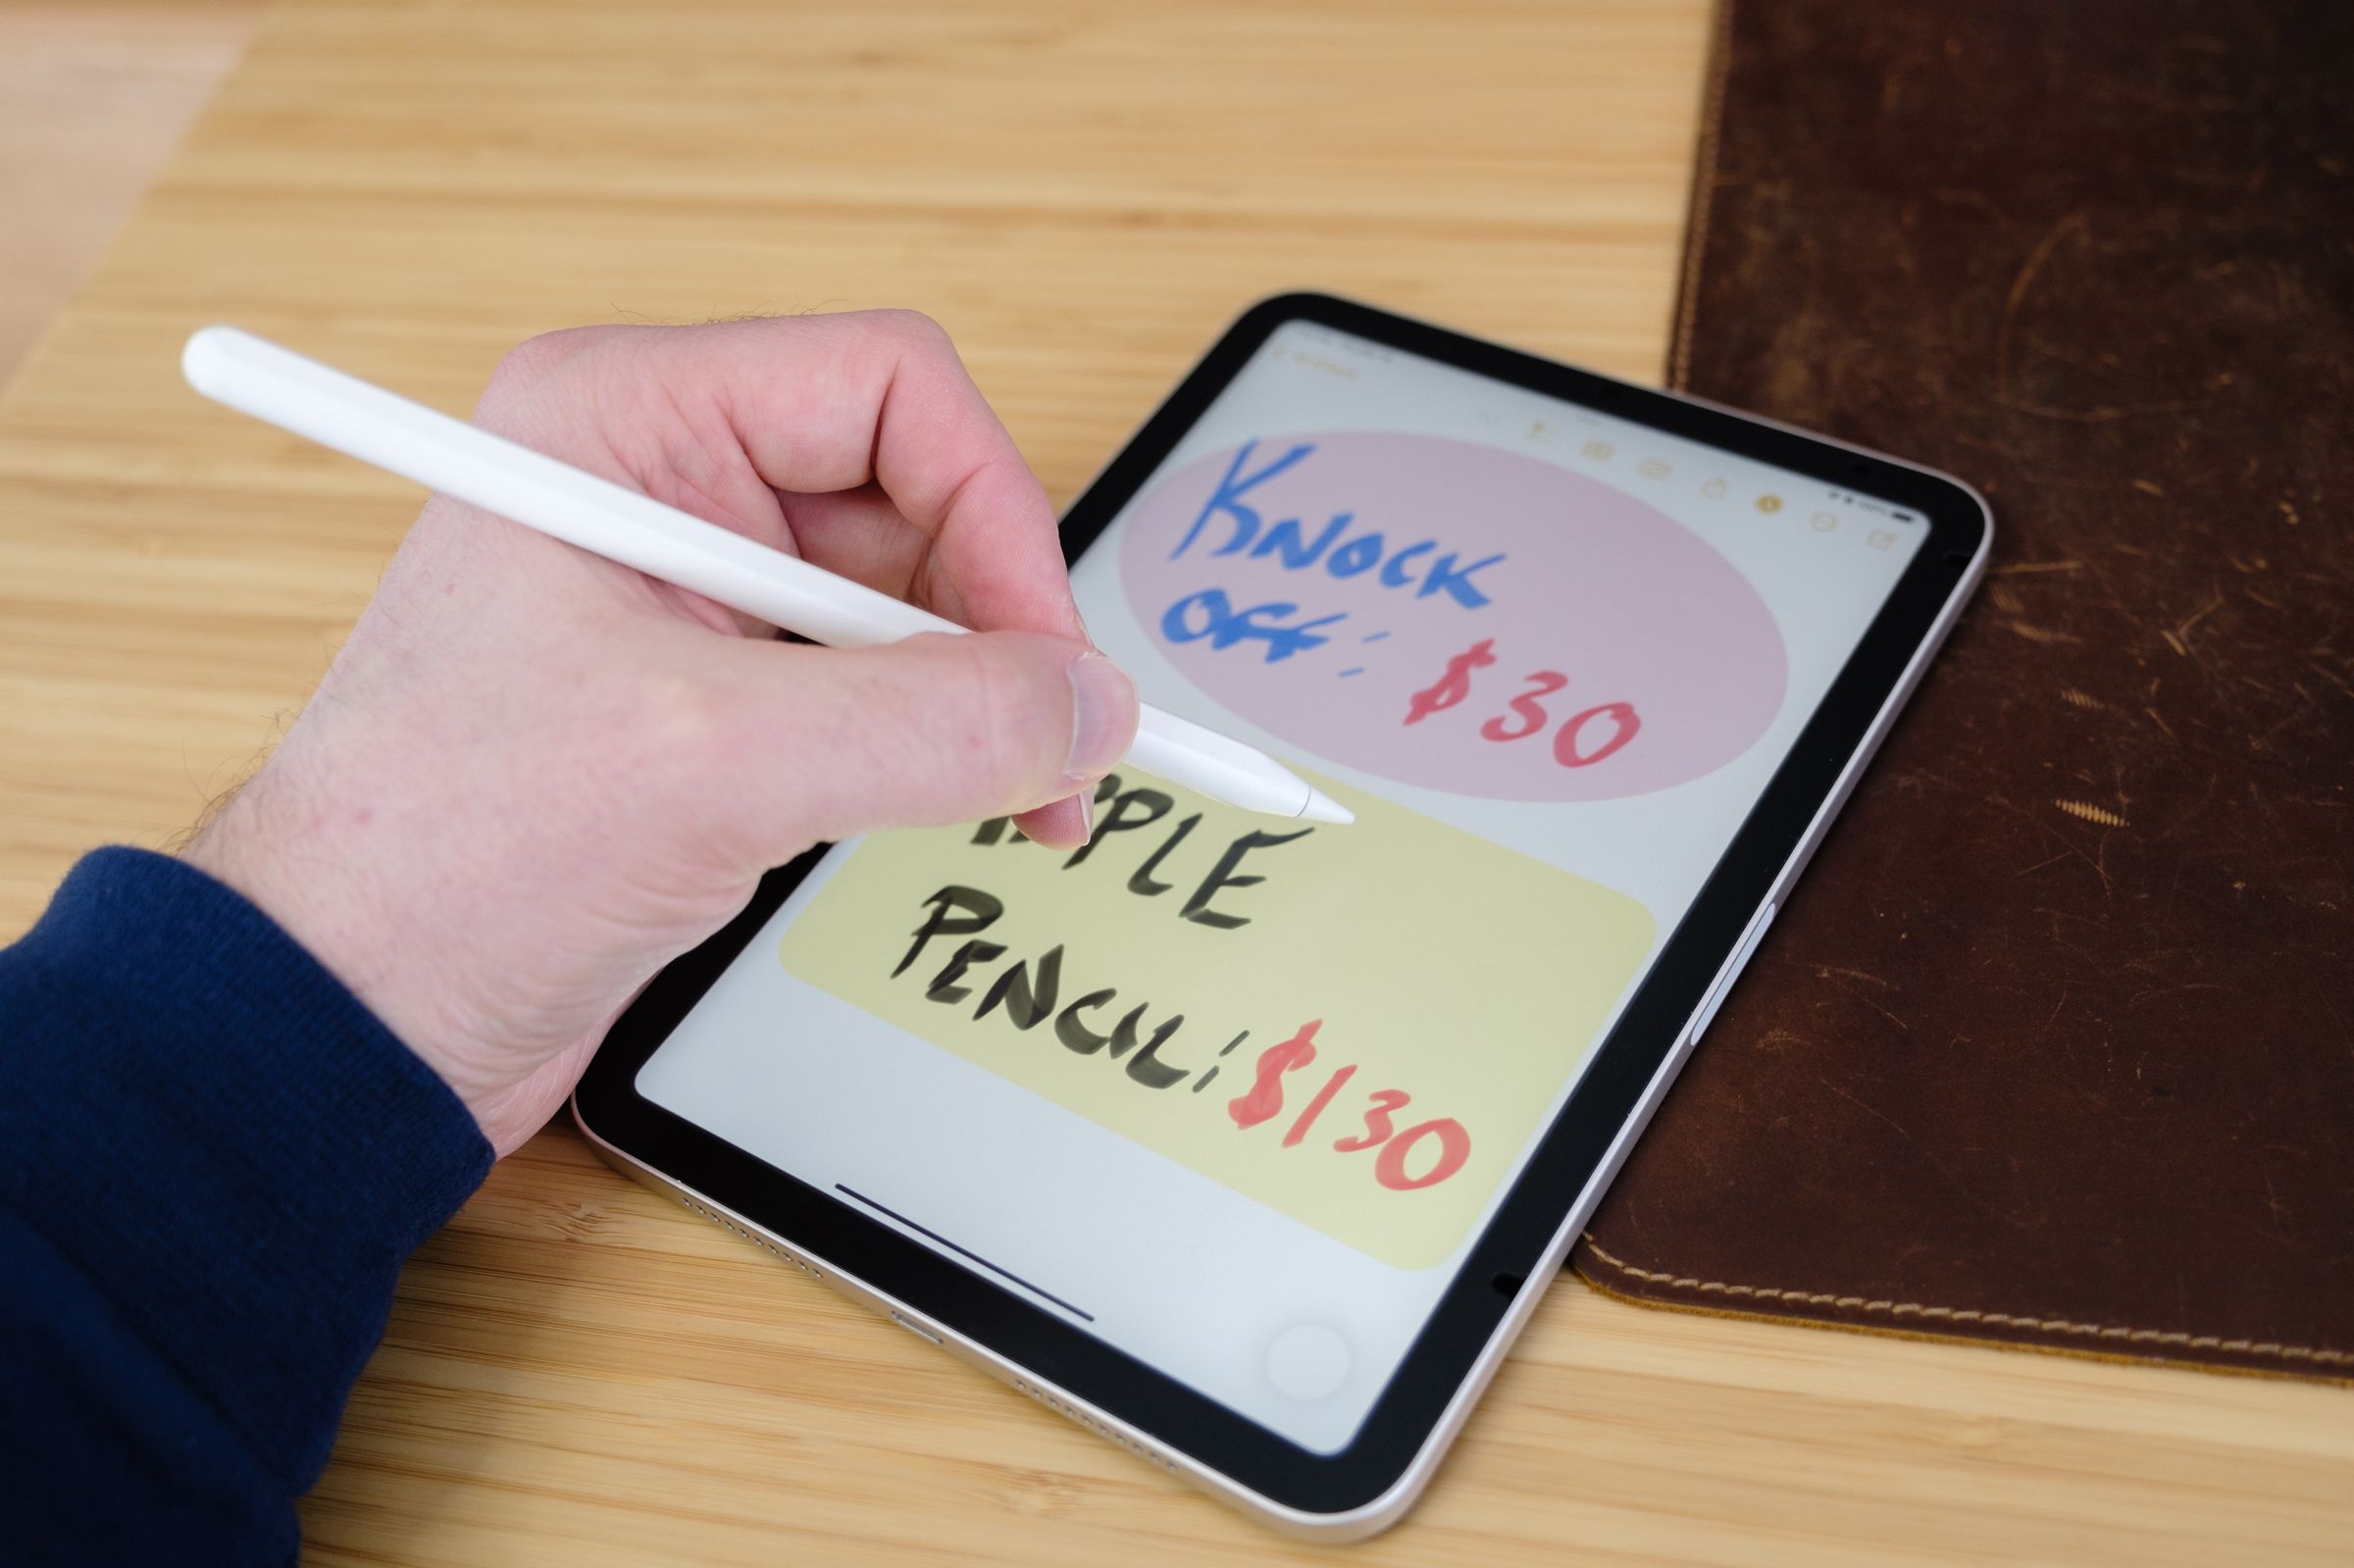 Writing on the iPad Mini with the StylusHome